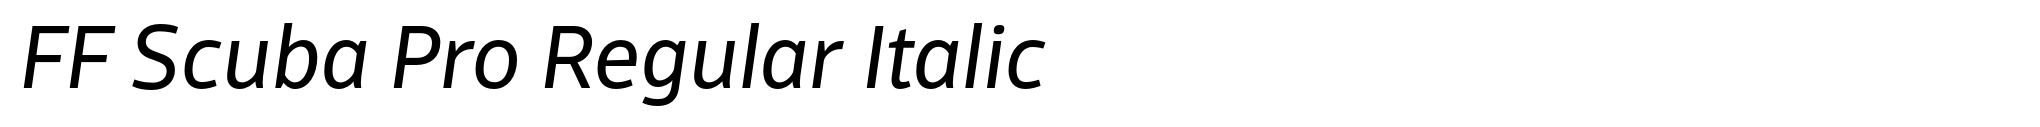 FF Scuba Pro Regular Italic image